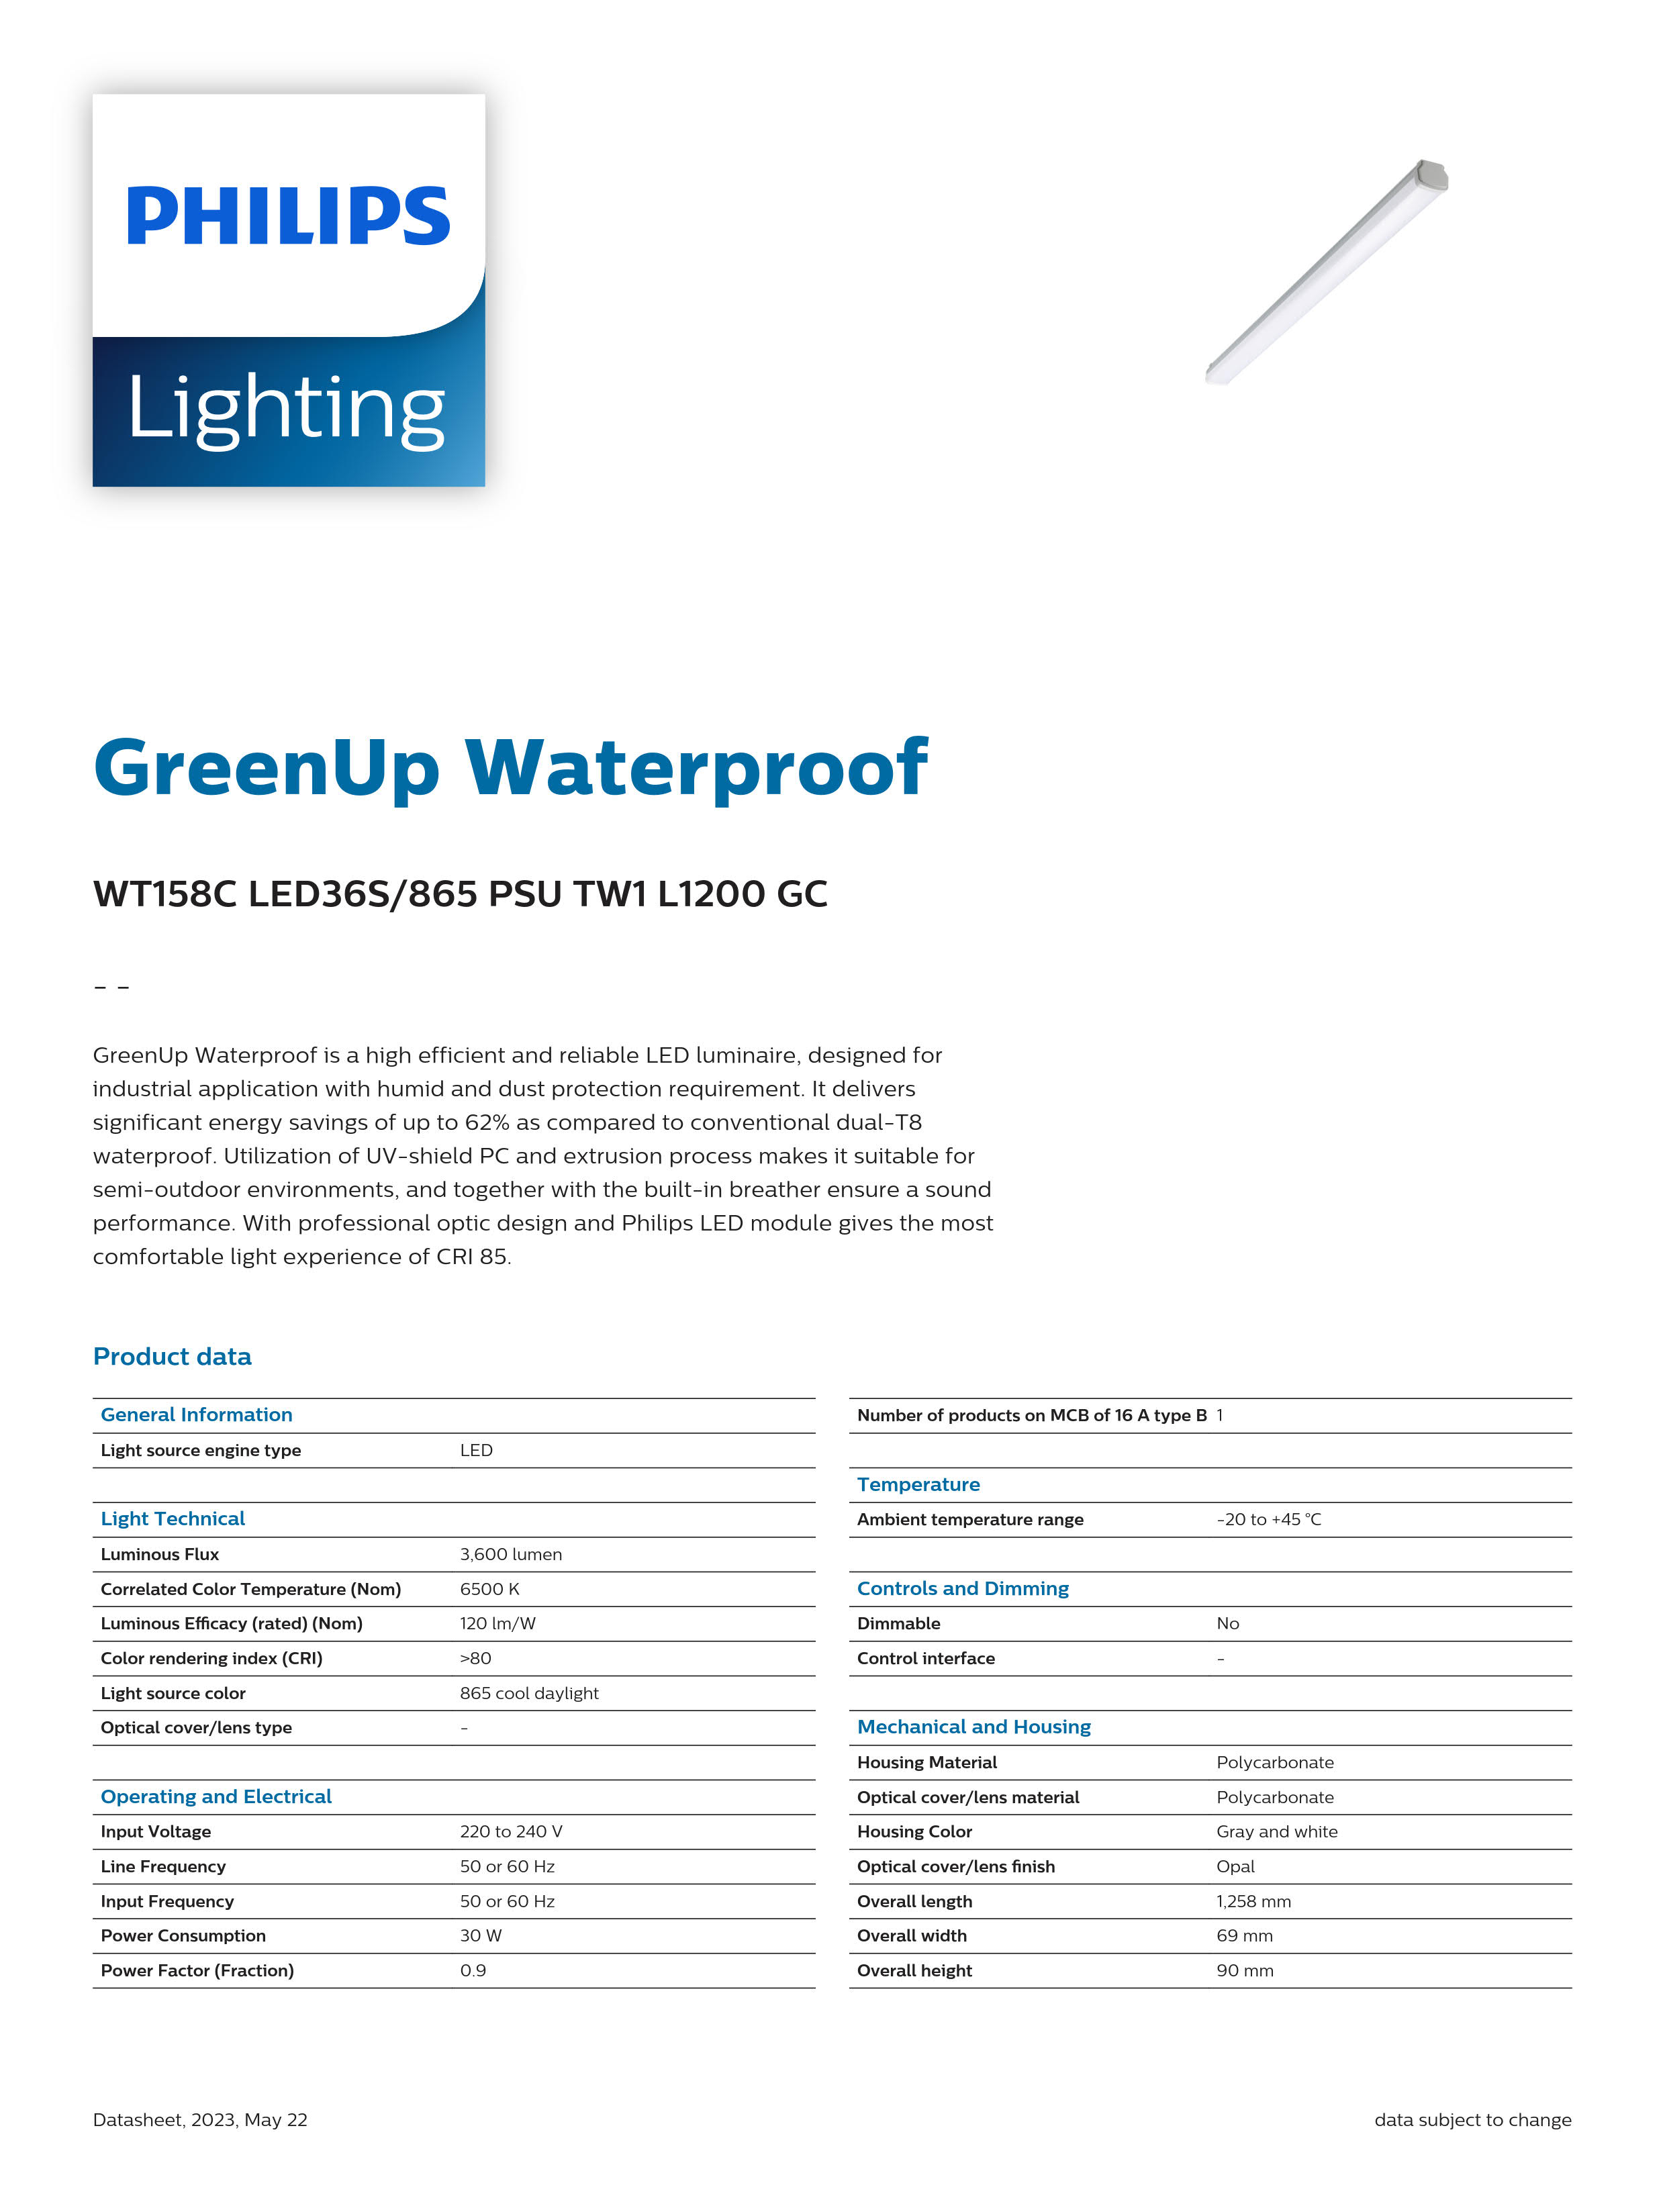 PHILIPS Waterproof WT158C LED36S/865 PSU TW1 L1200 GC 911401894880